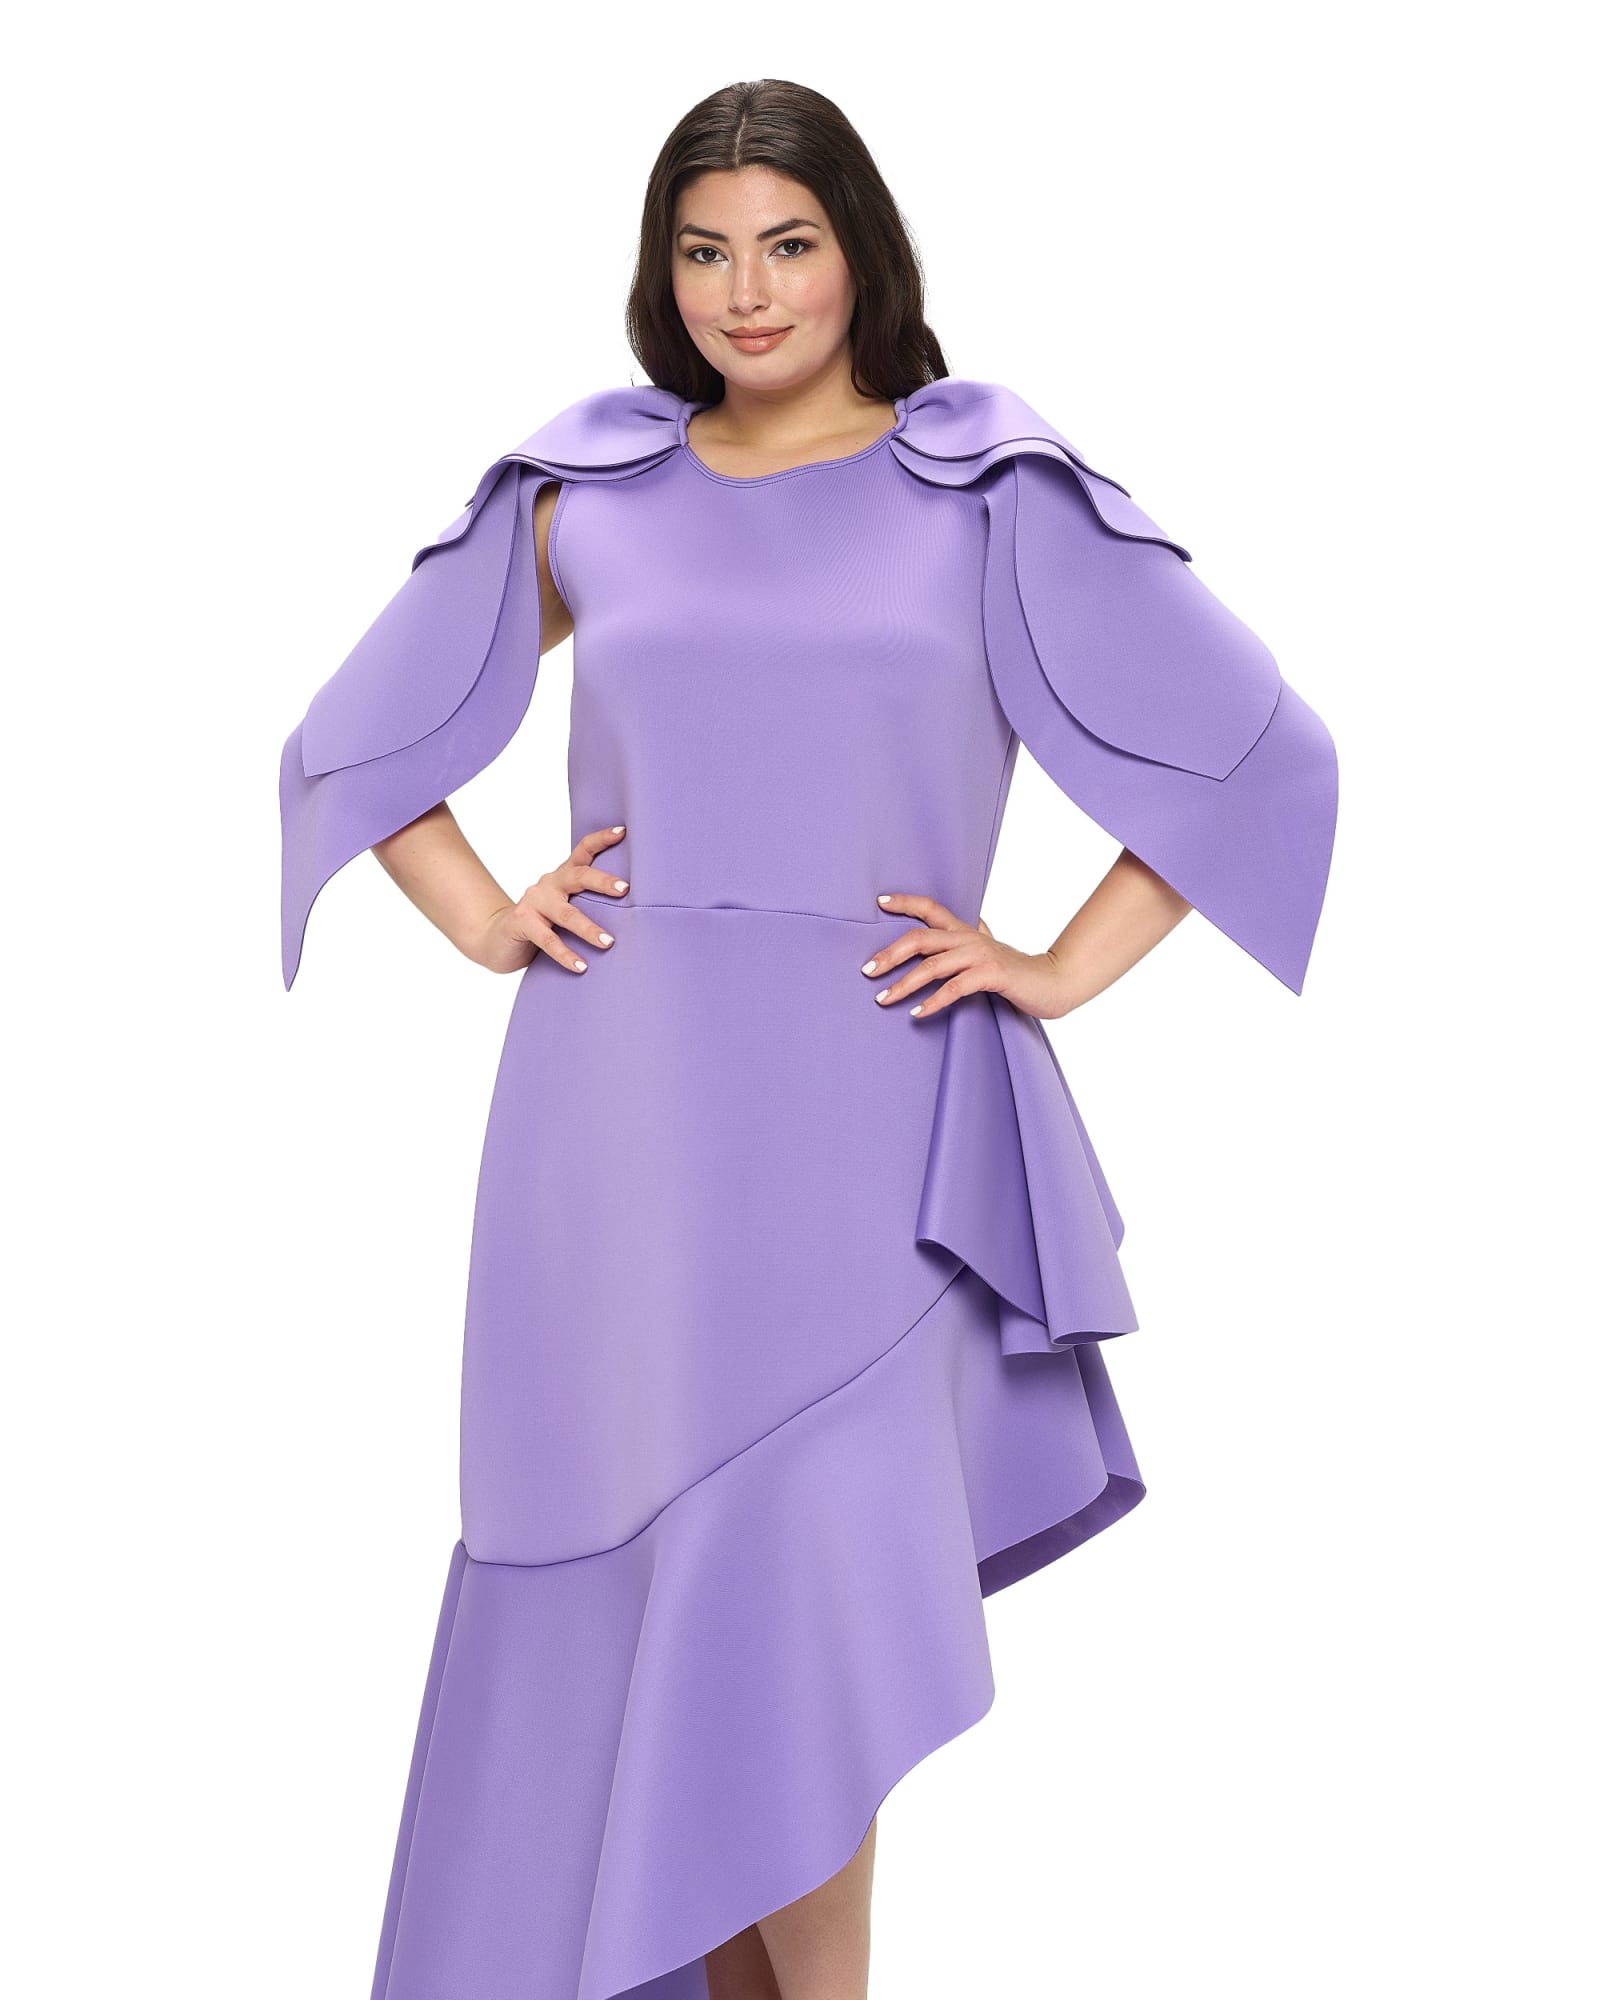 Lavender Color Dress